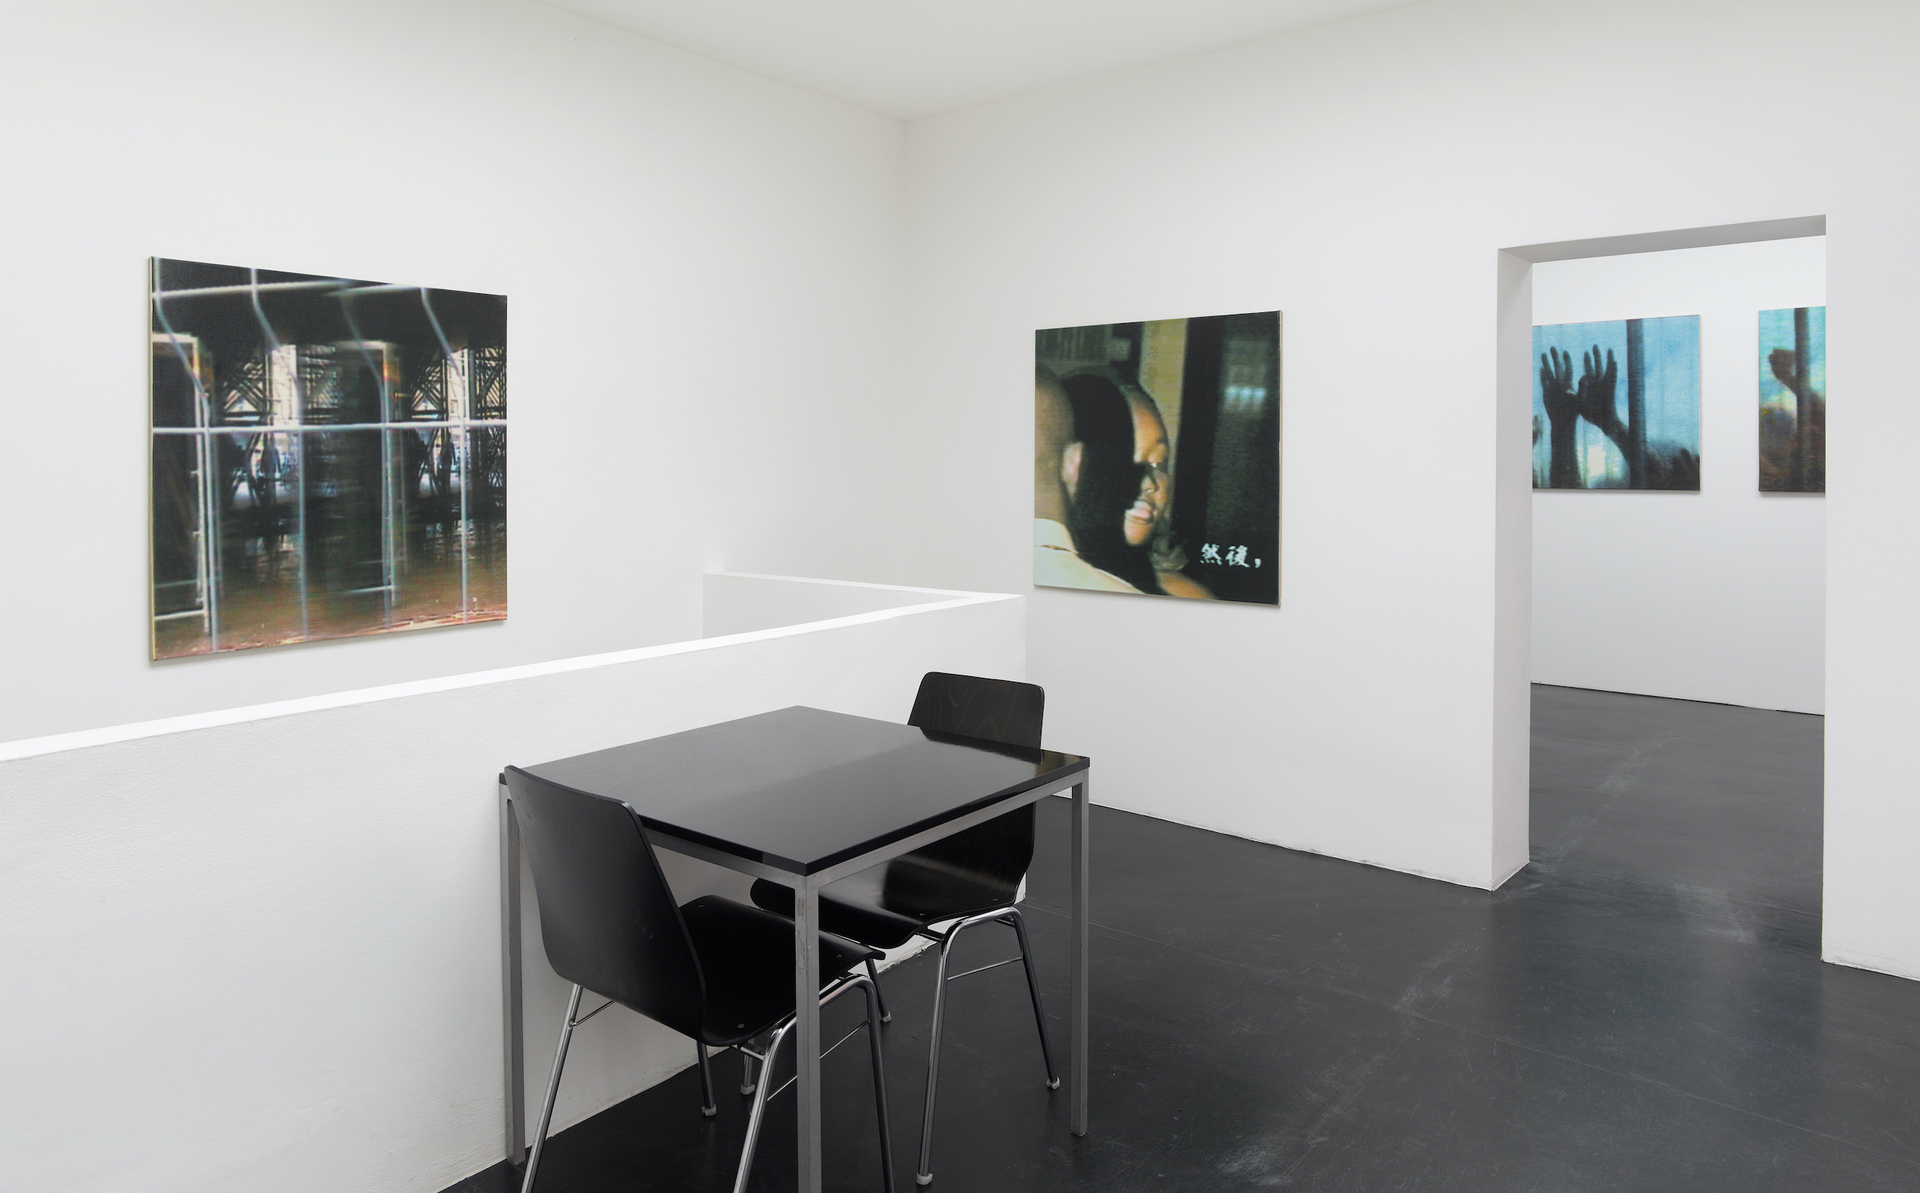 Installation view: Matthias Groebel, Satellites Cast No Shadow, Drei, Cologne, 2021